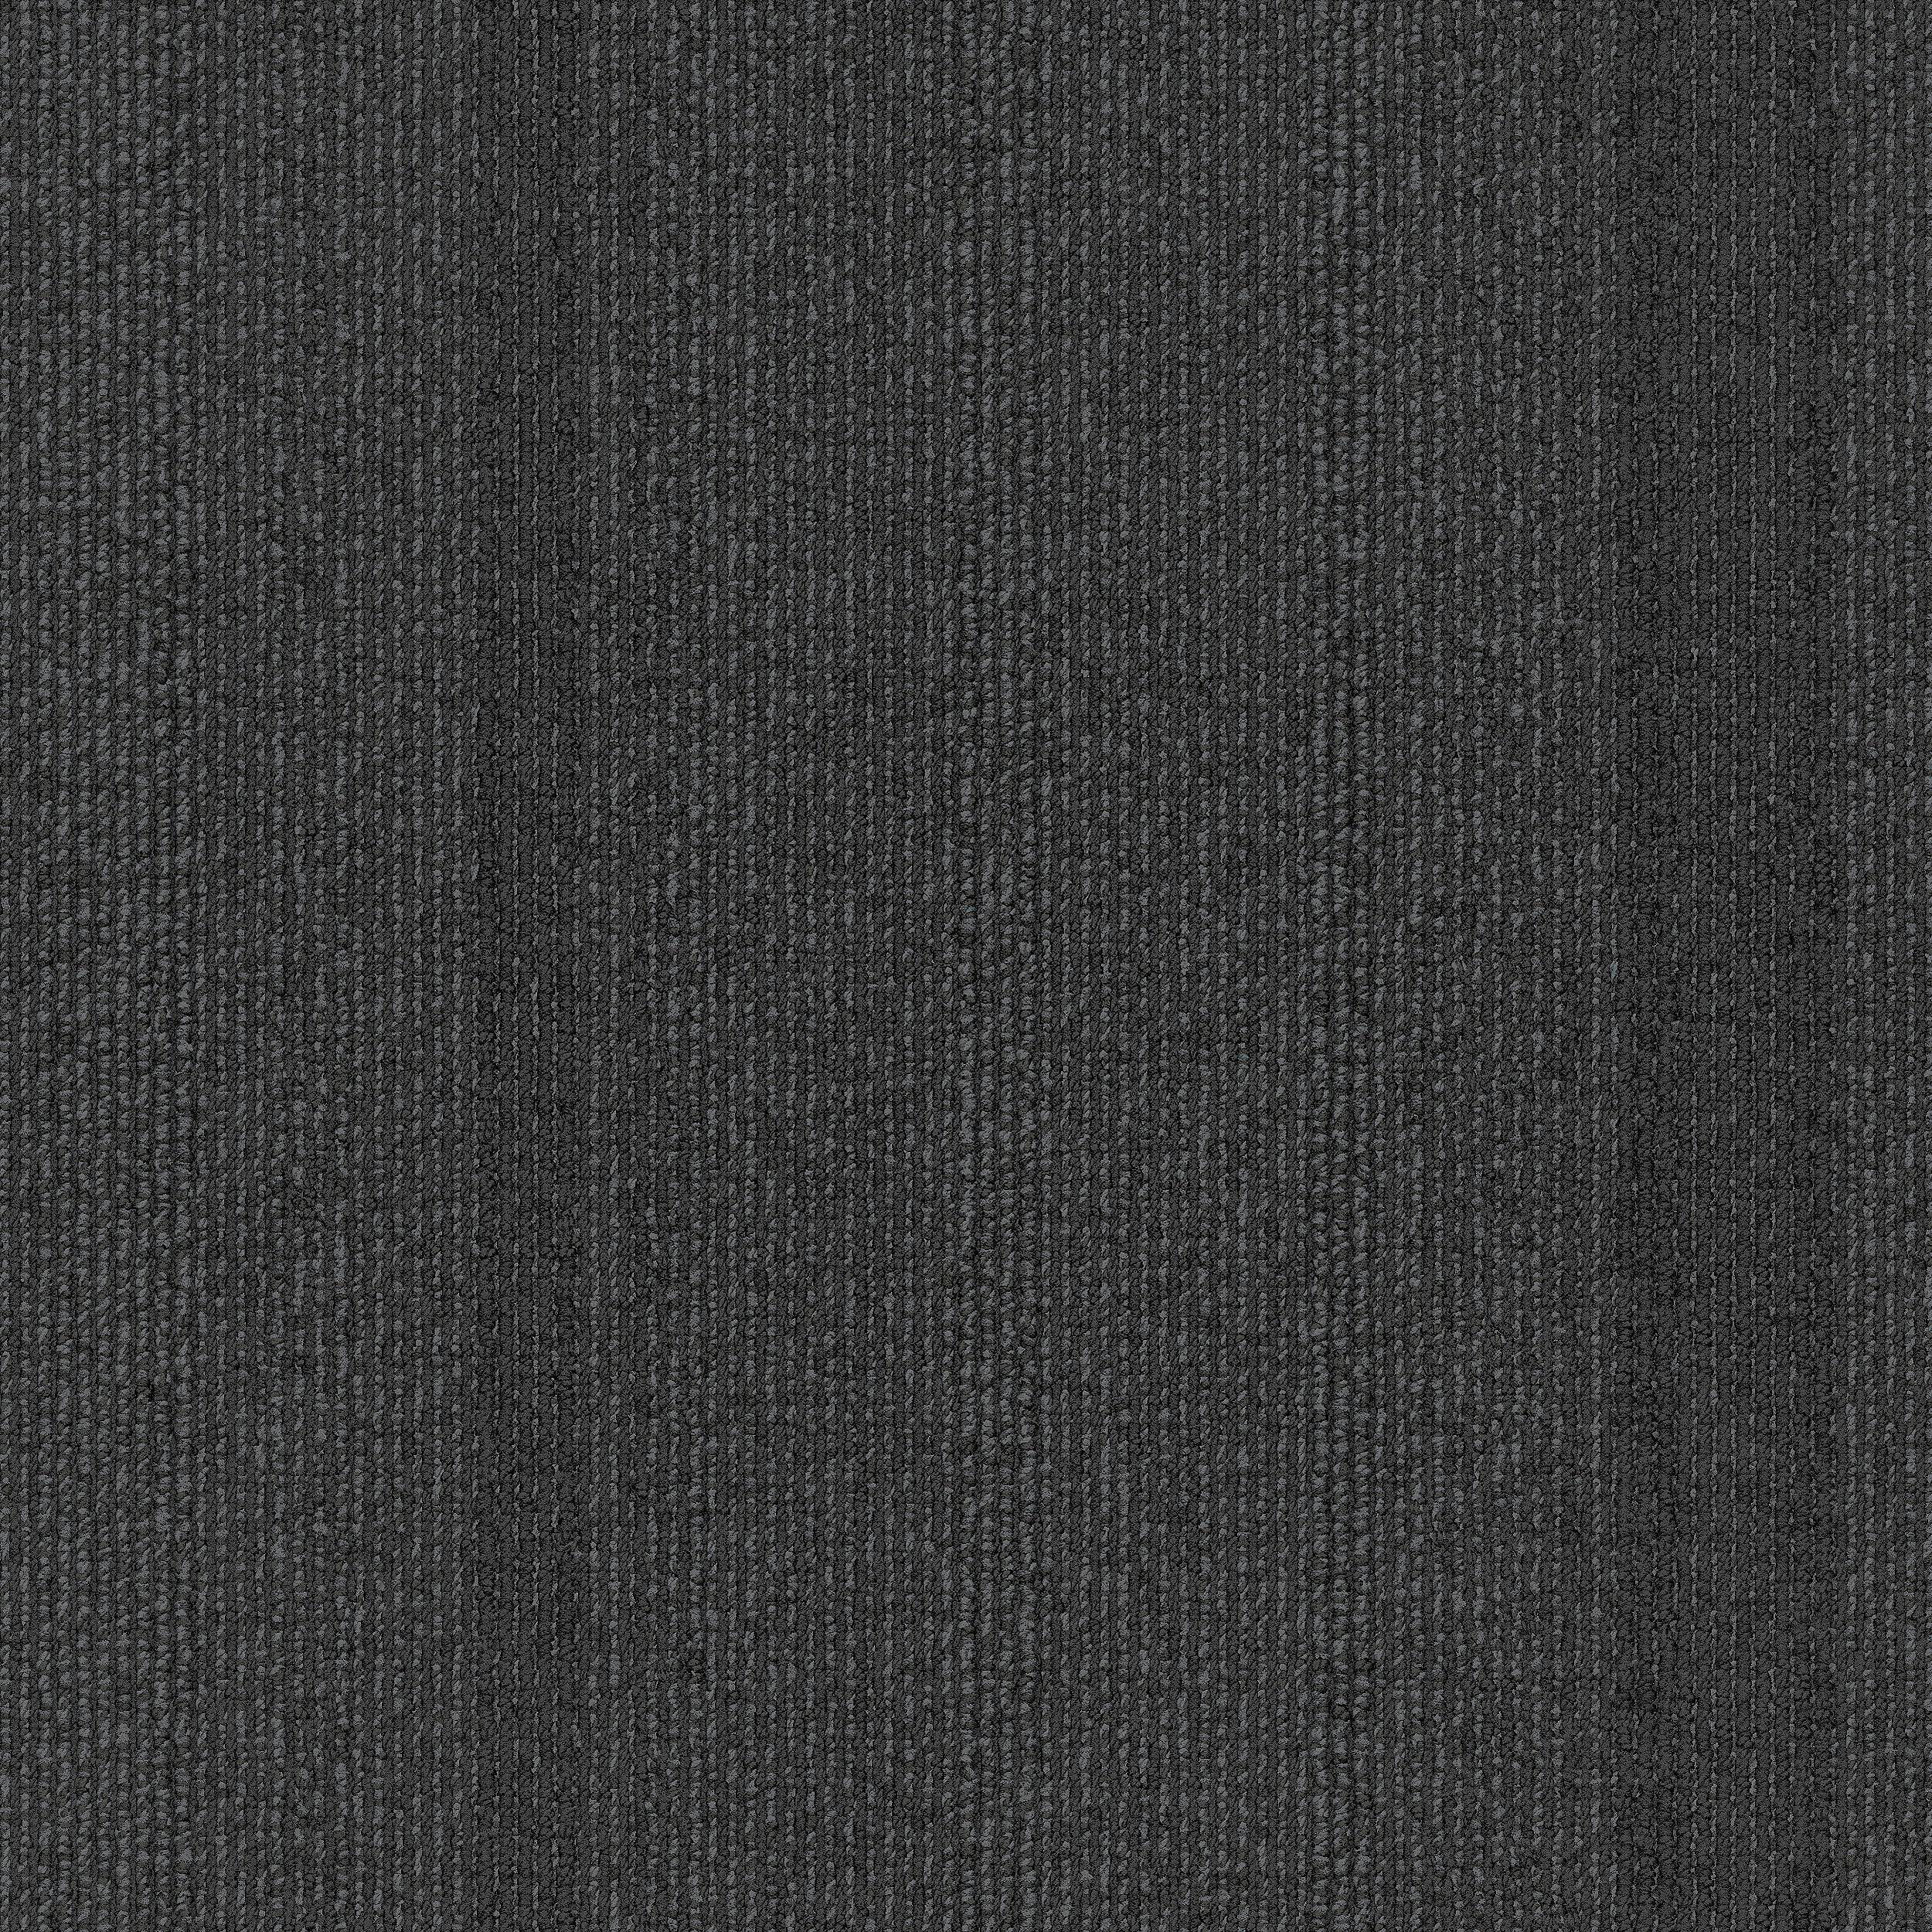 S105 Carpet Tile In Black imagen número 2